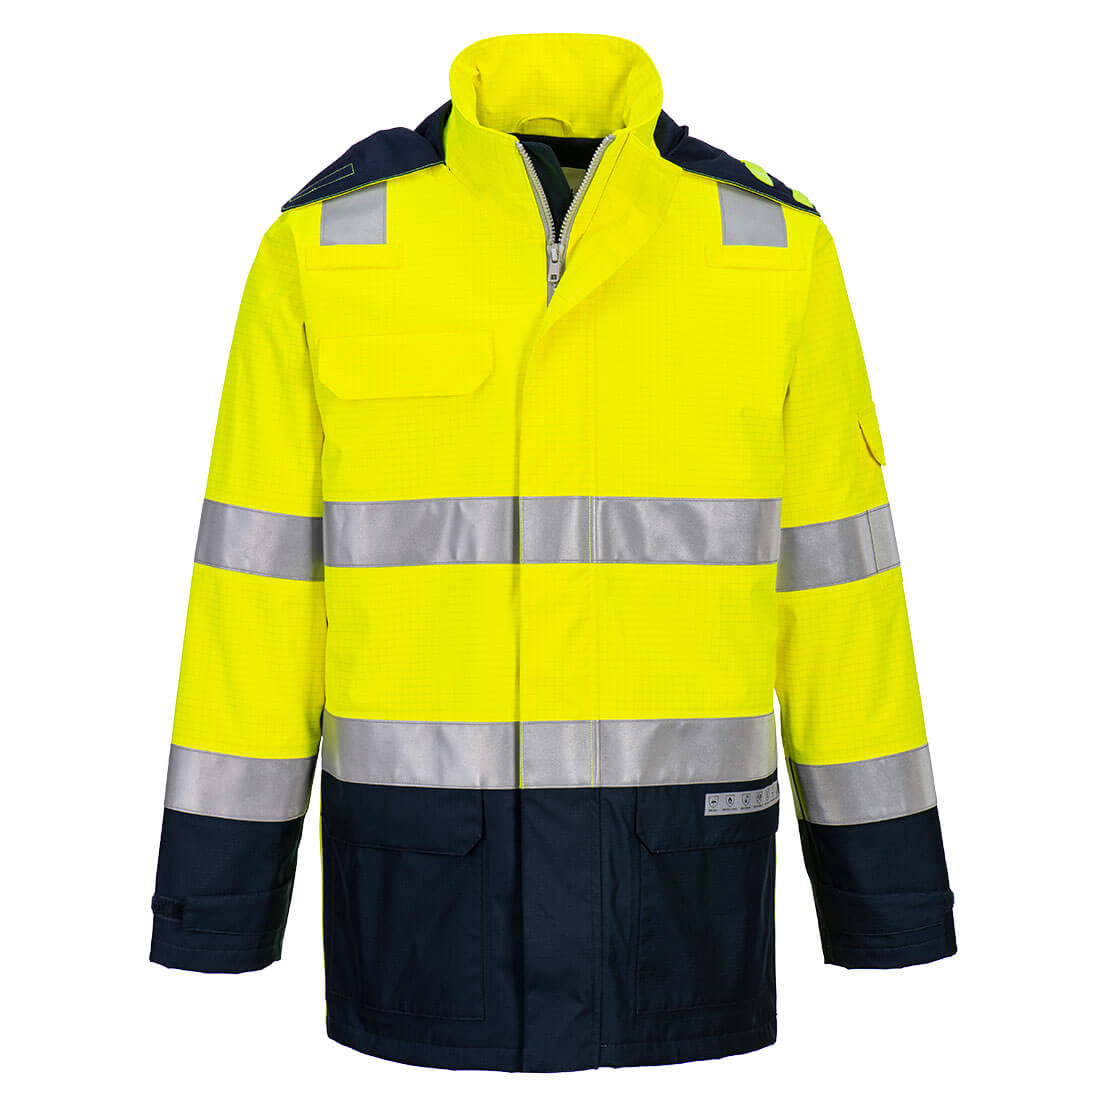 Bizflame Rain+ Hi-Vis Light Arc Jacket - Safetywear